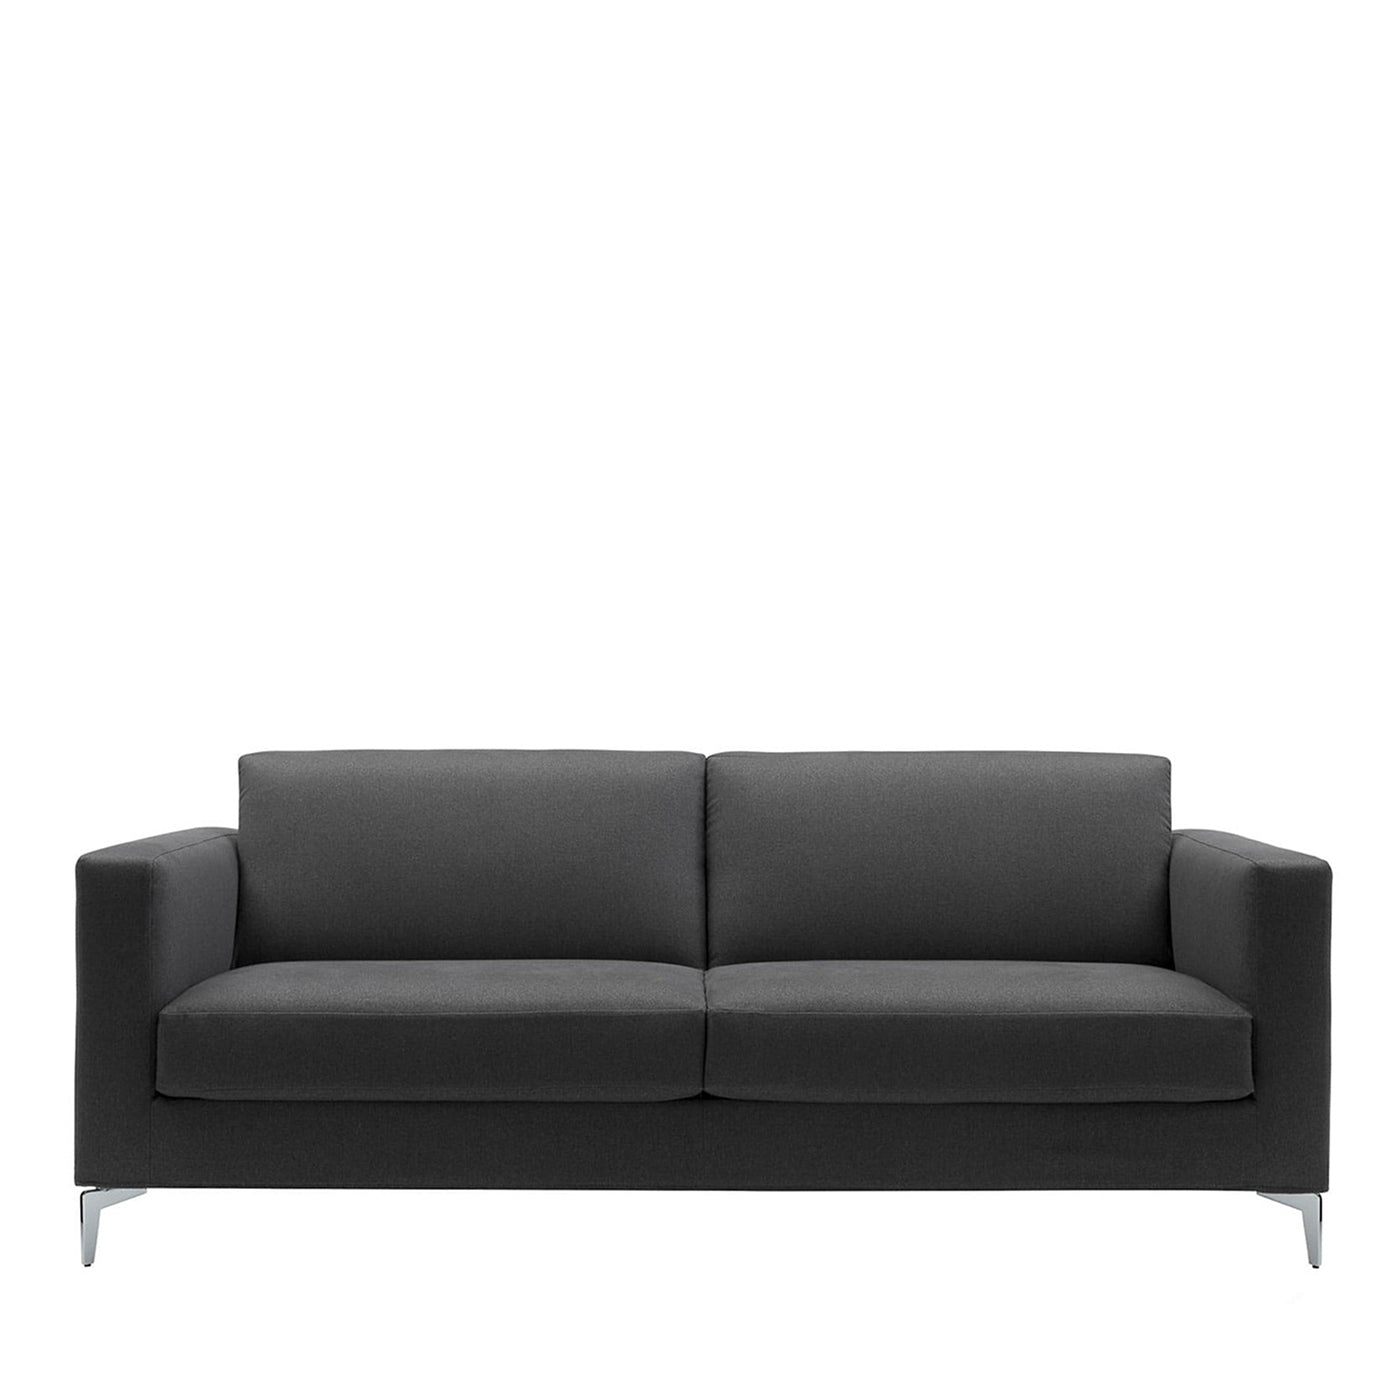 Richard Graphite-Gray Sofa Bed - Main view